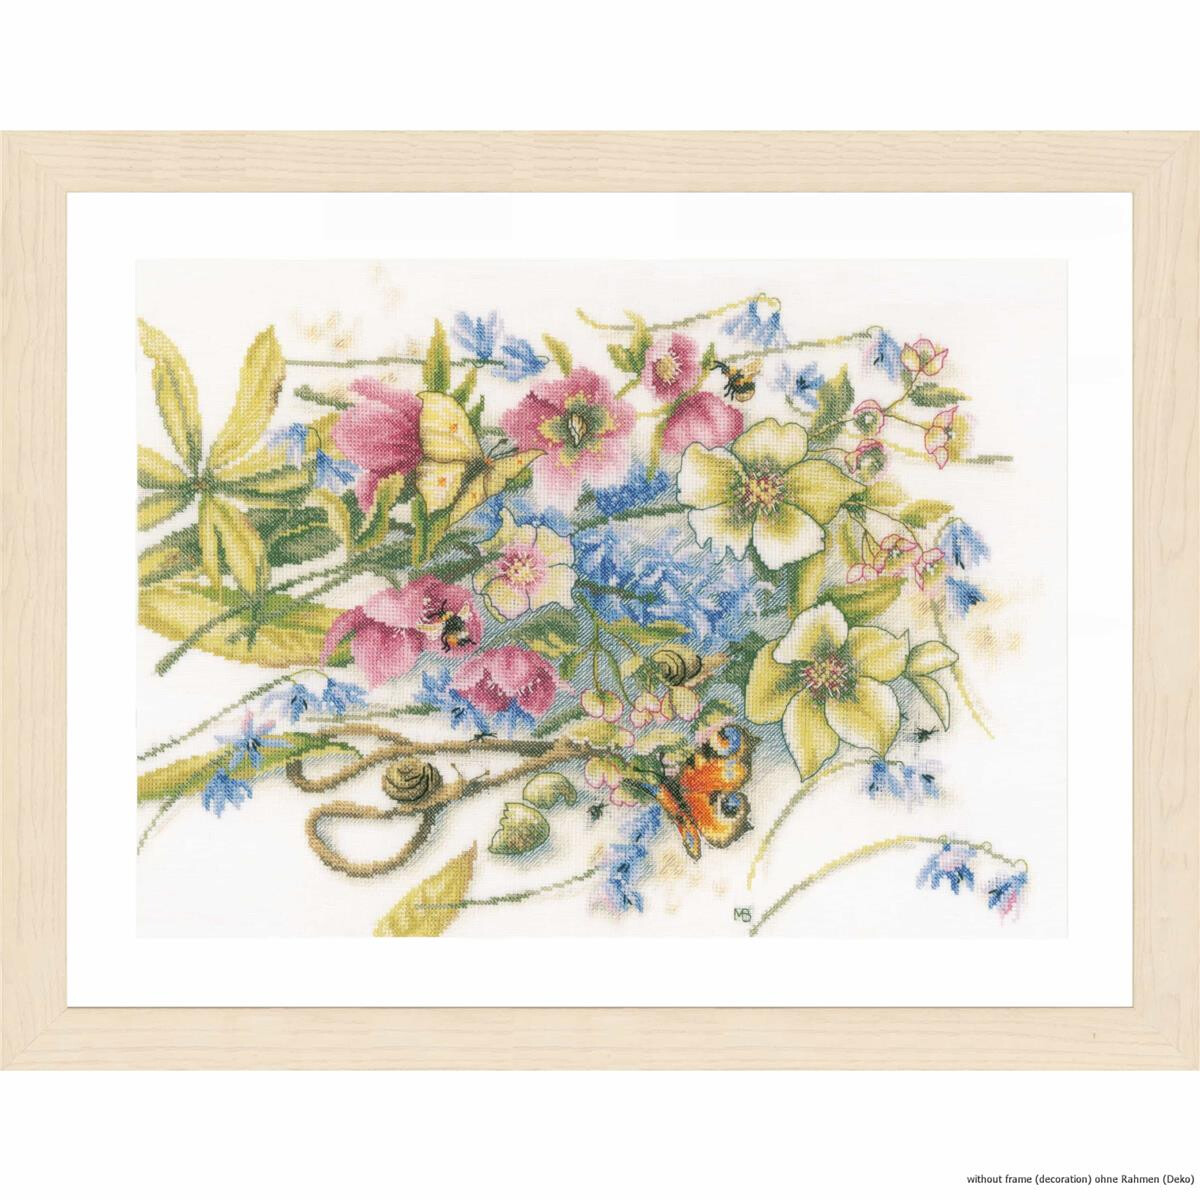 A framed work of art shows a colorful floral arrangement...